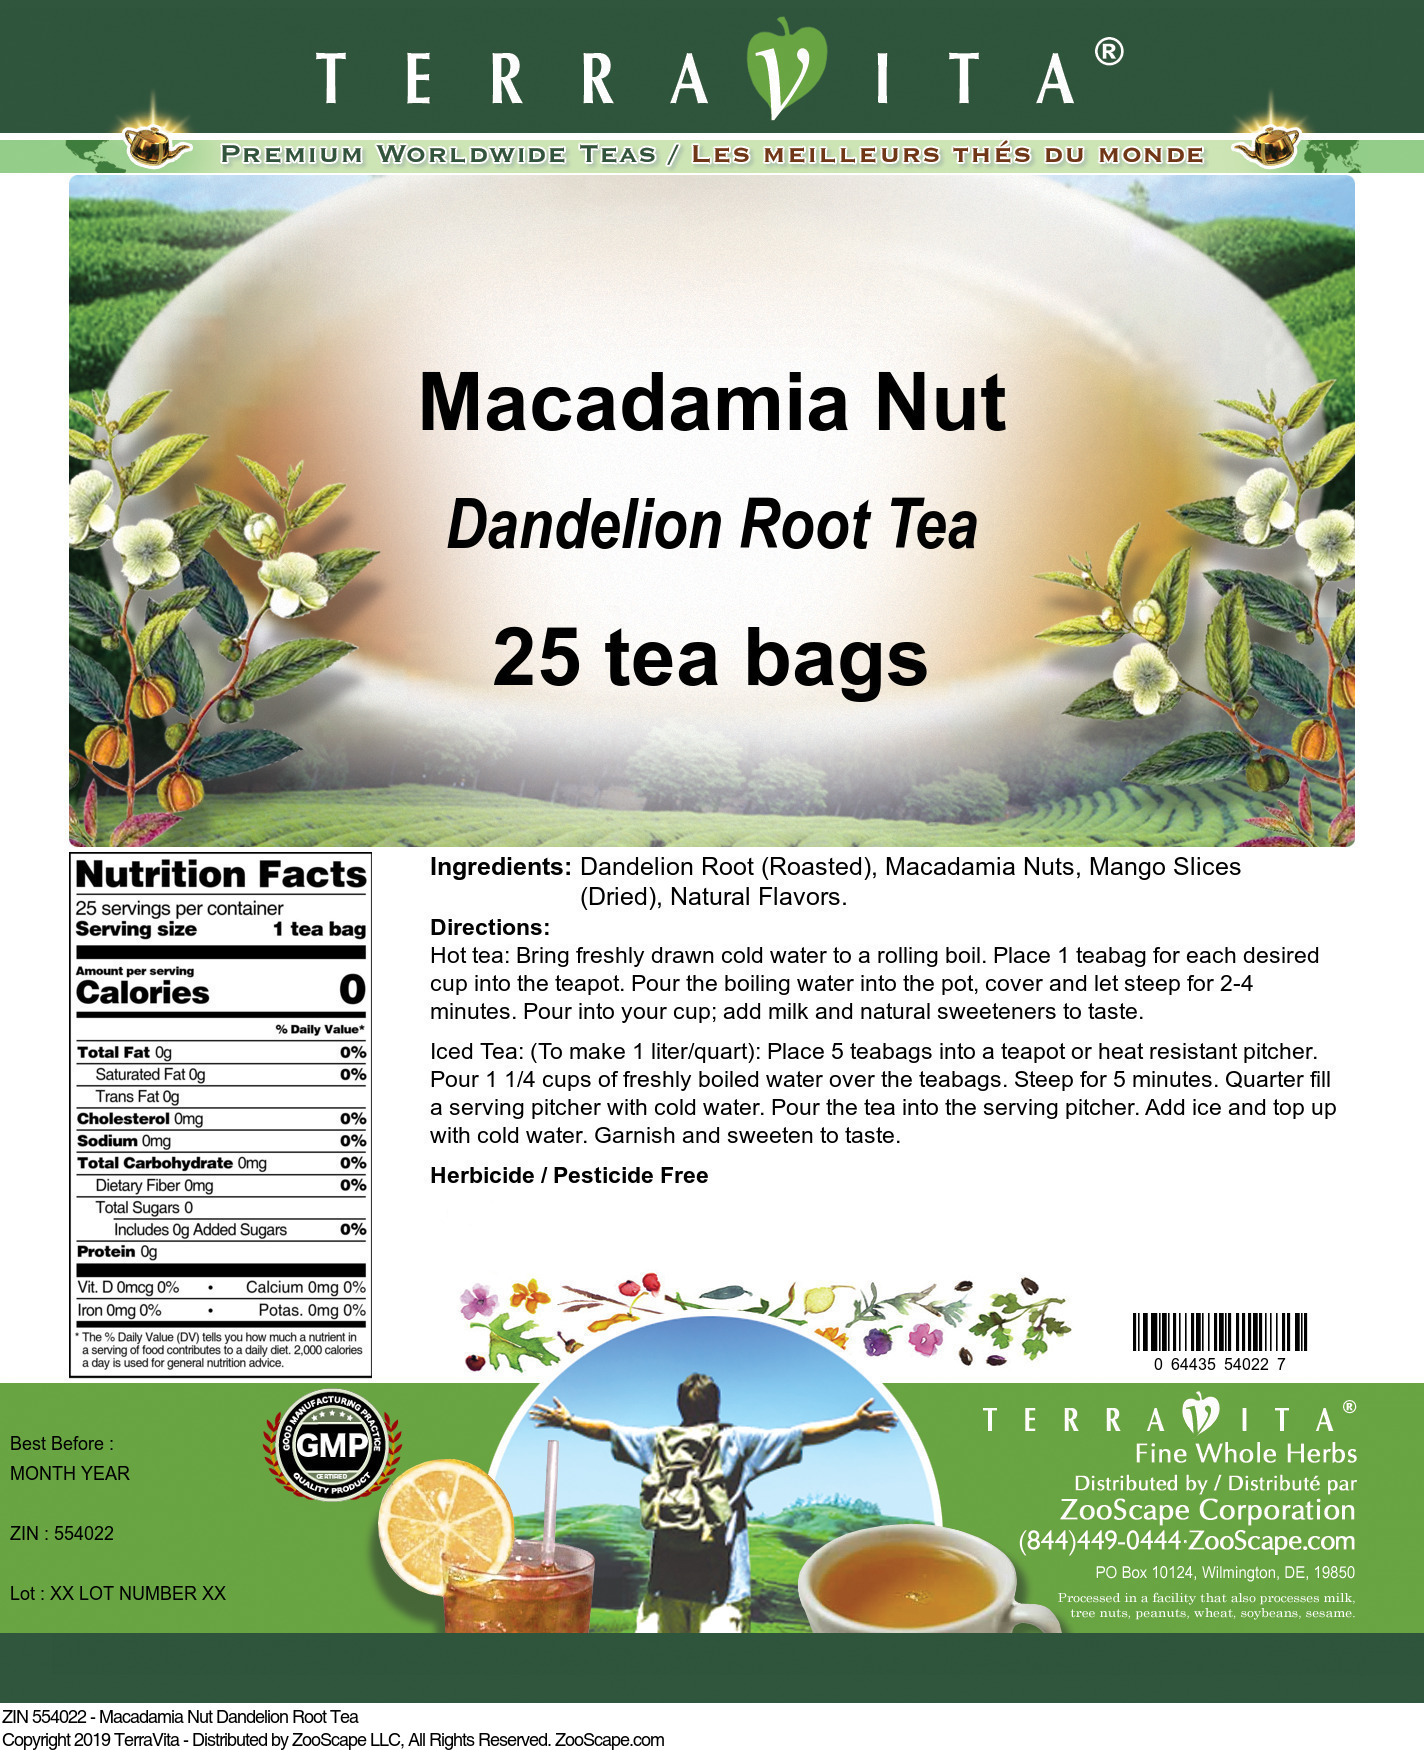 Macadamia Nut Dandelion Root Tea - Label